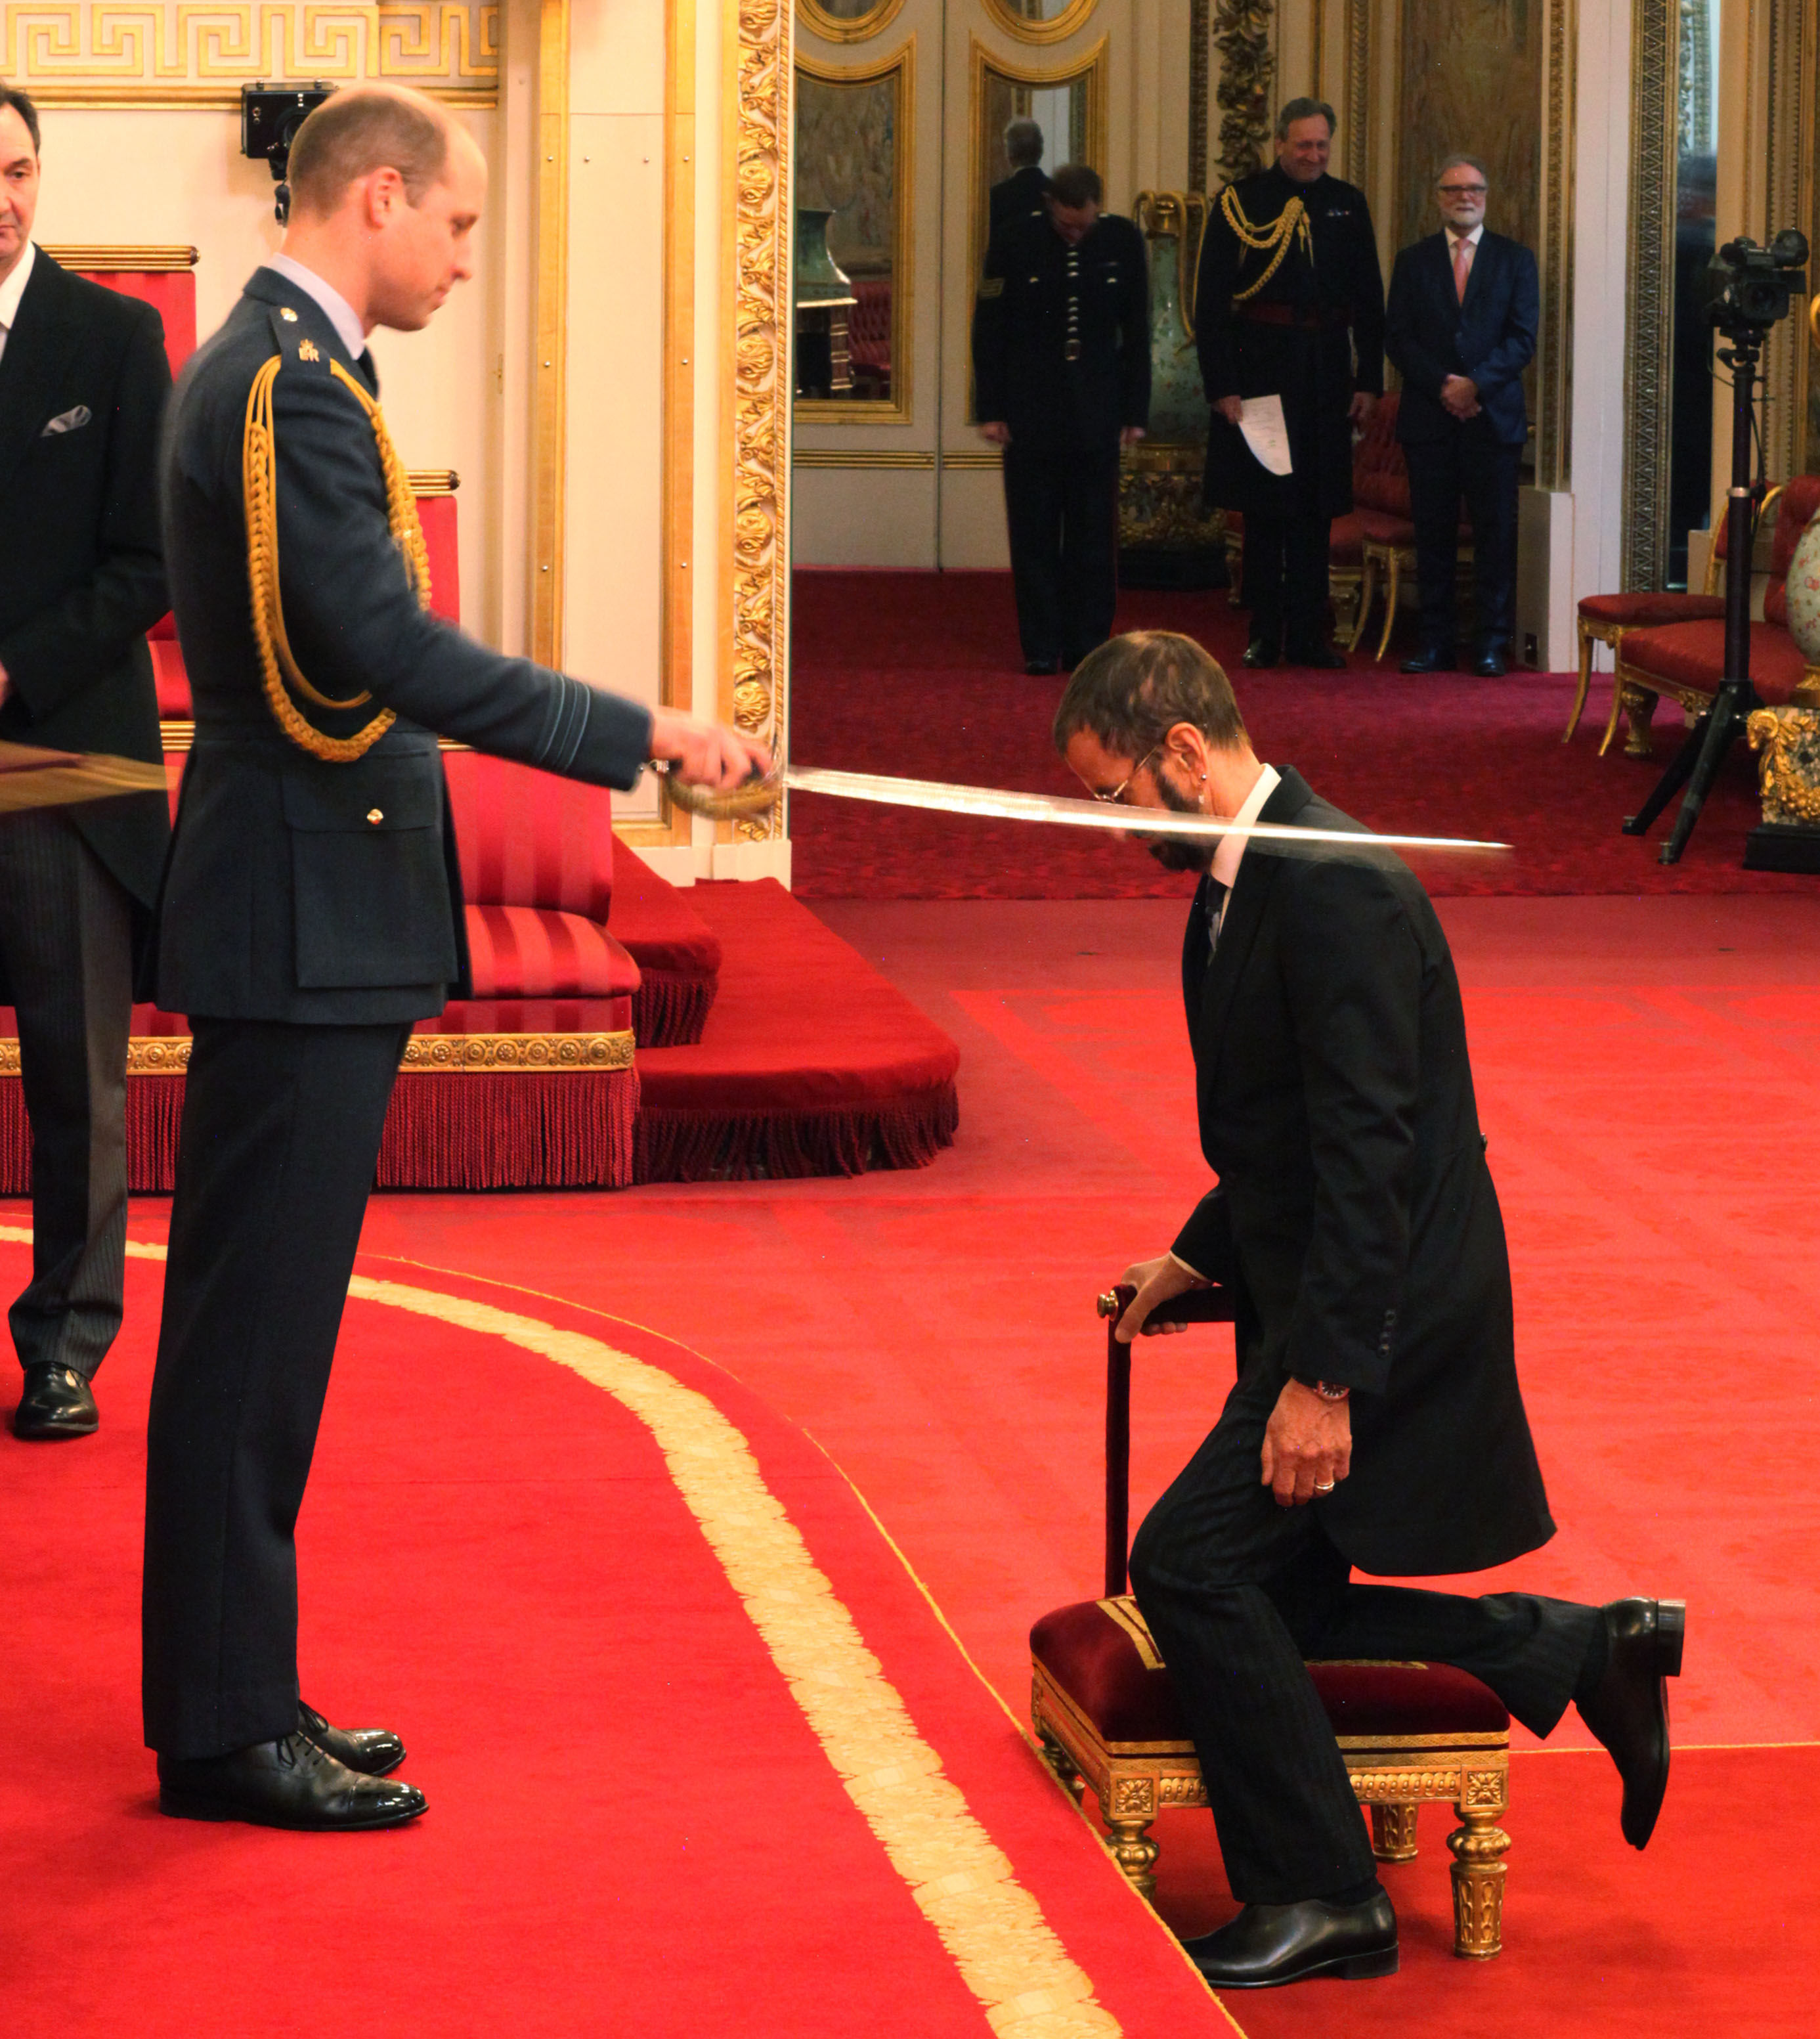 Ringo Starr knighted